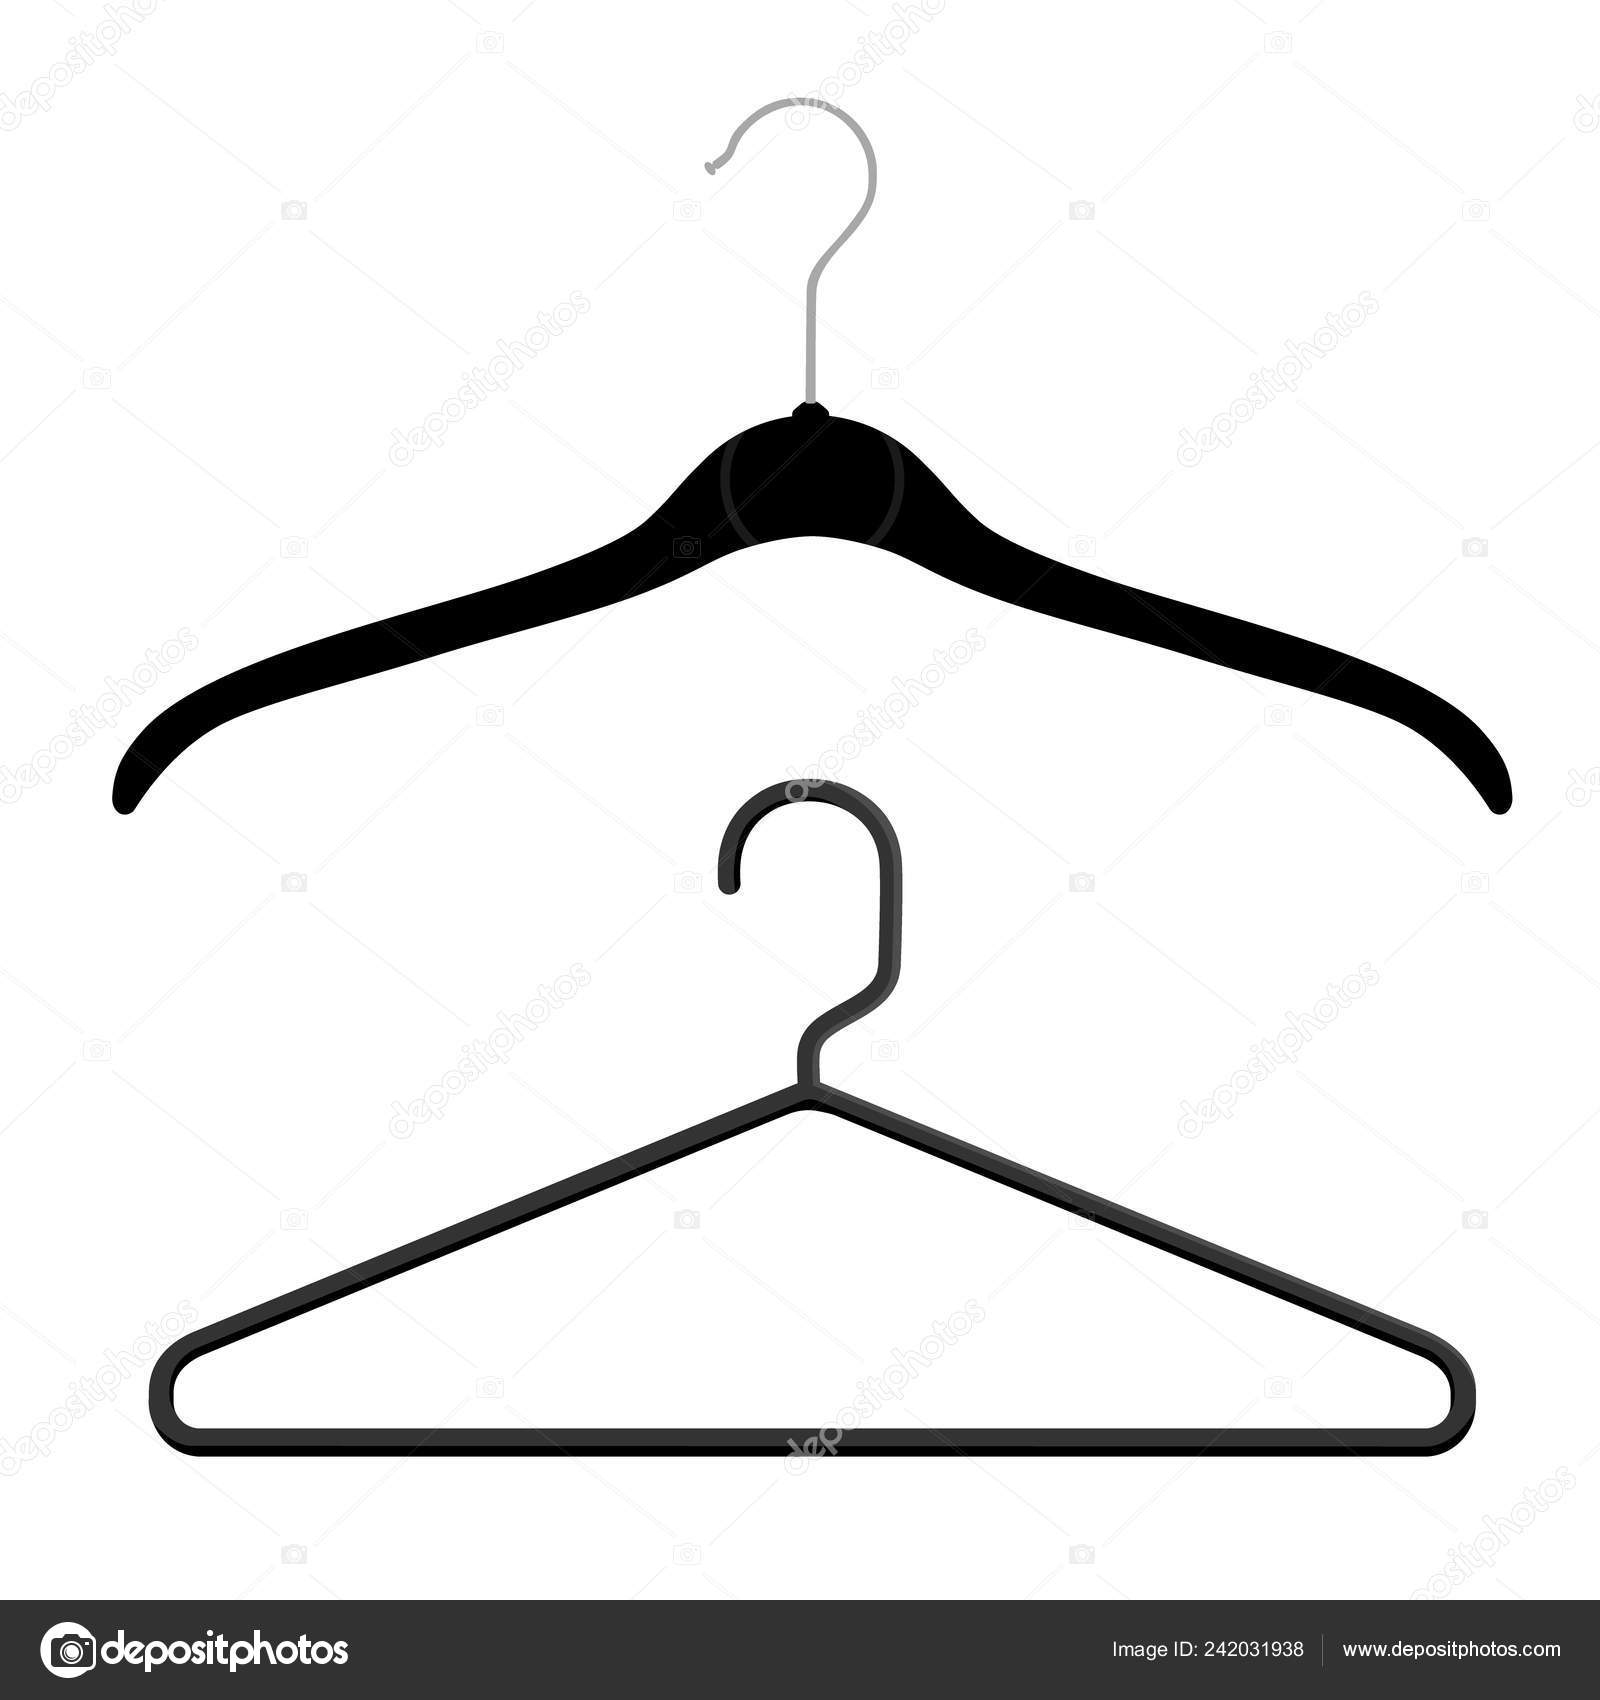 https://st4.depositphotos.com/3864435/24203/v/1600/depositphotos_242031938-stock-illustration-black-plastic-coat-hangers-clothes.jpg